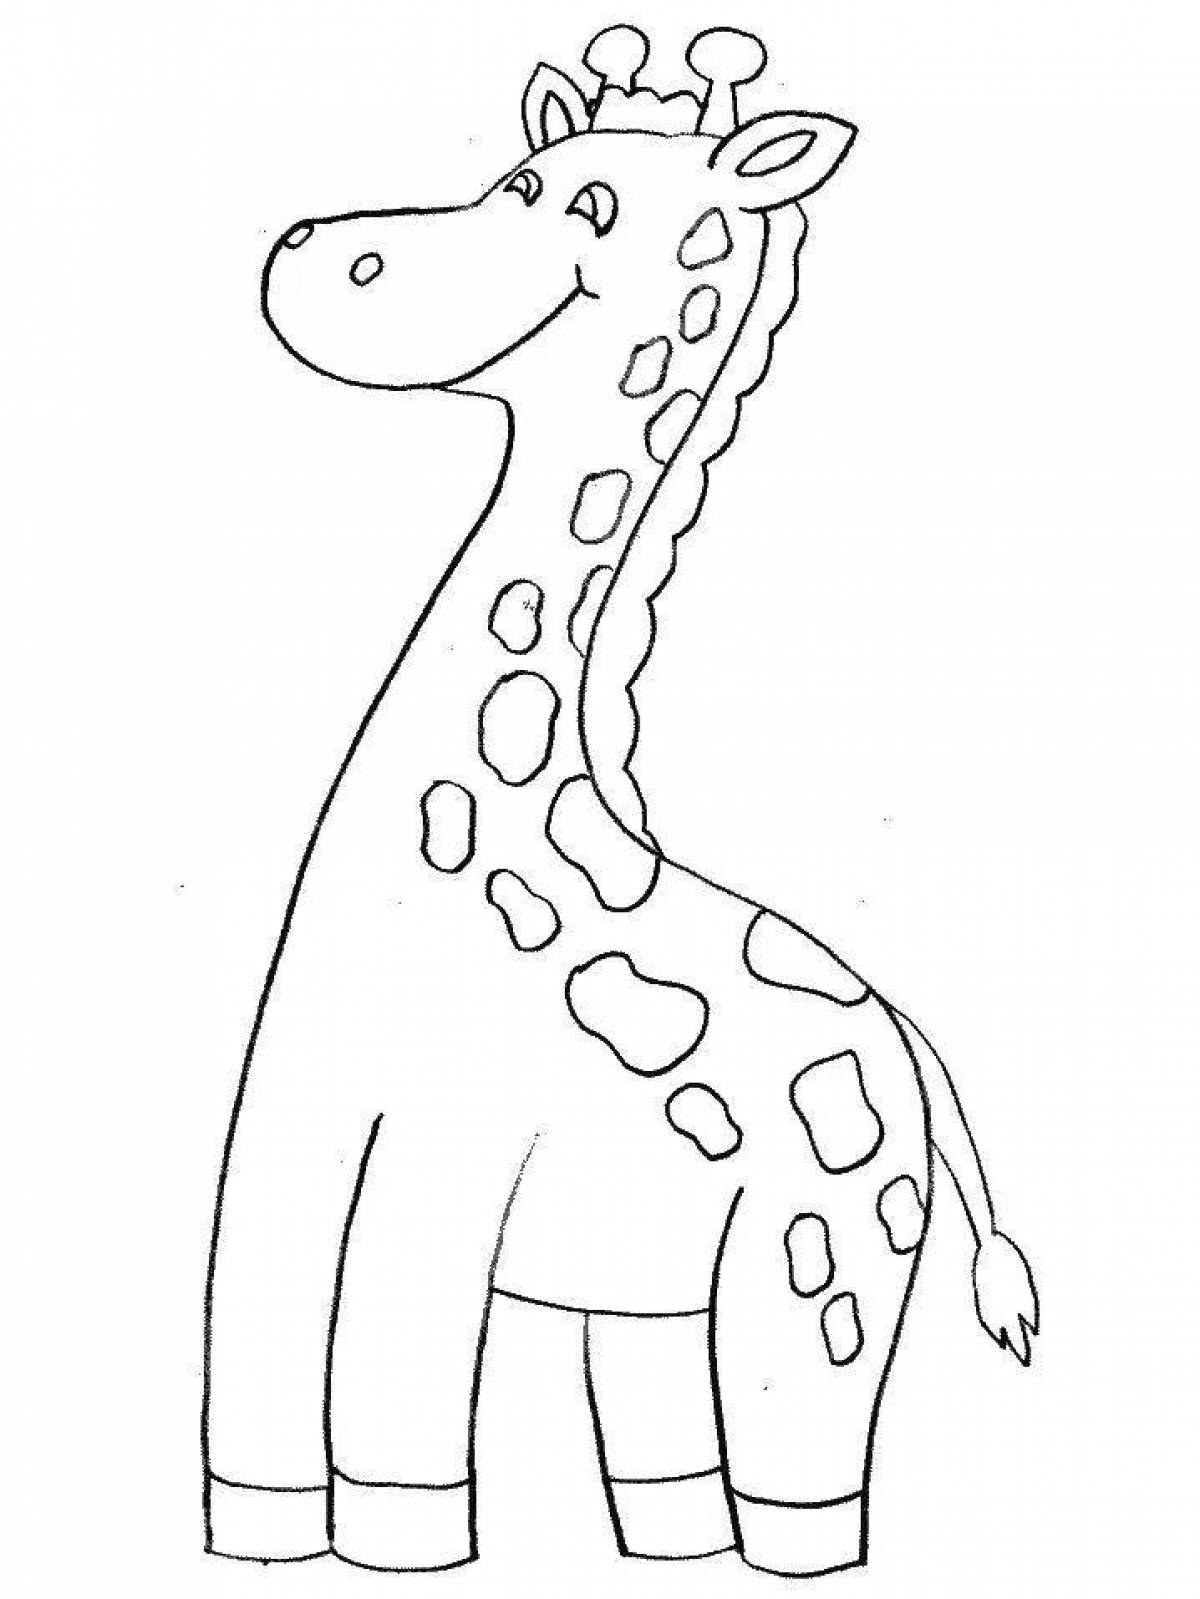 Glowing giraffe coloring page